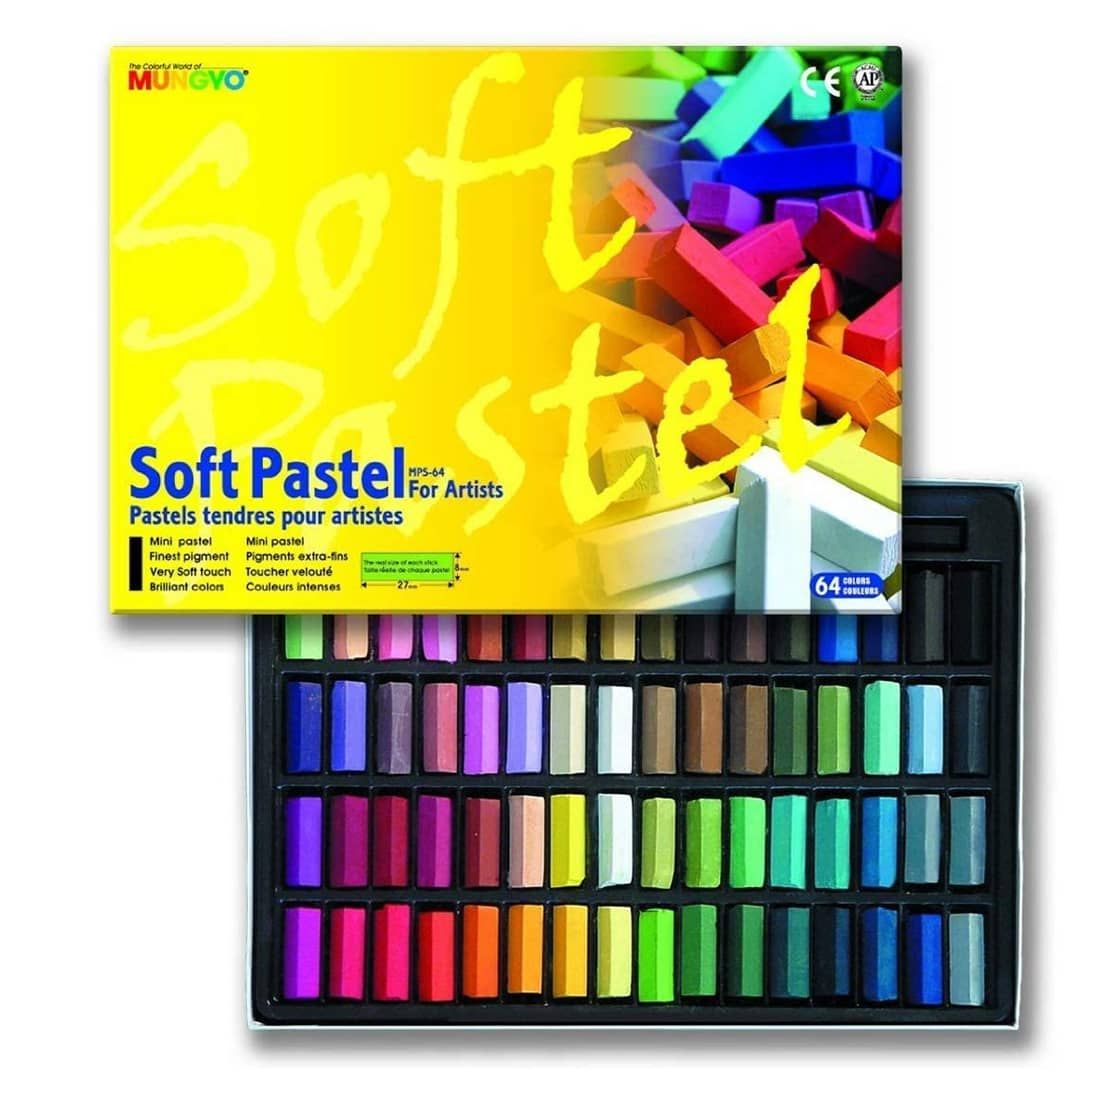 https://www.jerrysartarama.com/media/catalog/product/cache/ecb49a32eeb5603594b082bd5fe65733/m/u/mungyo-gallery-standard-soft-pastels-set-64.jpg